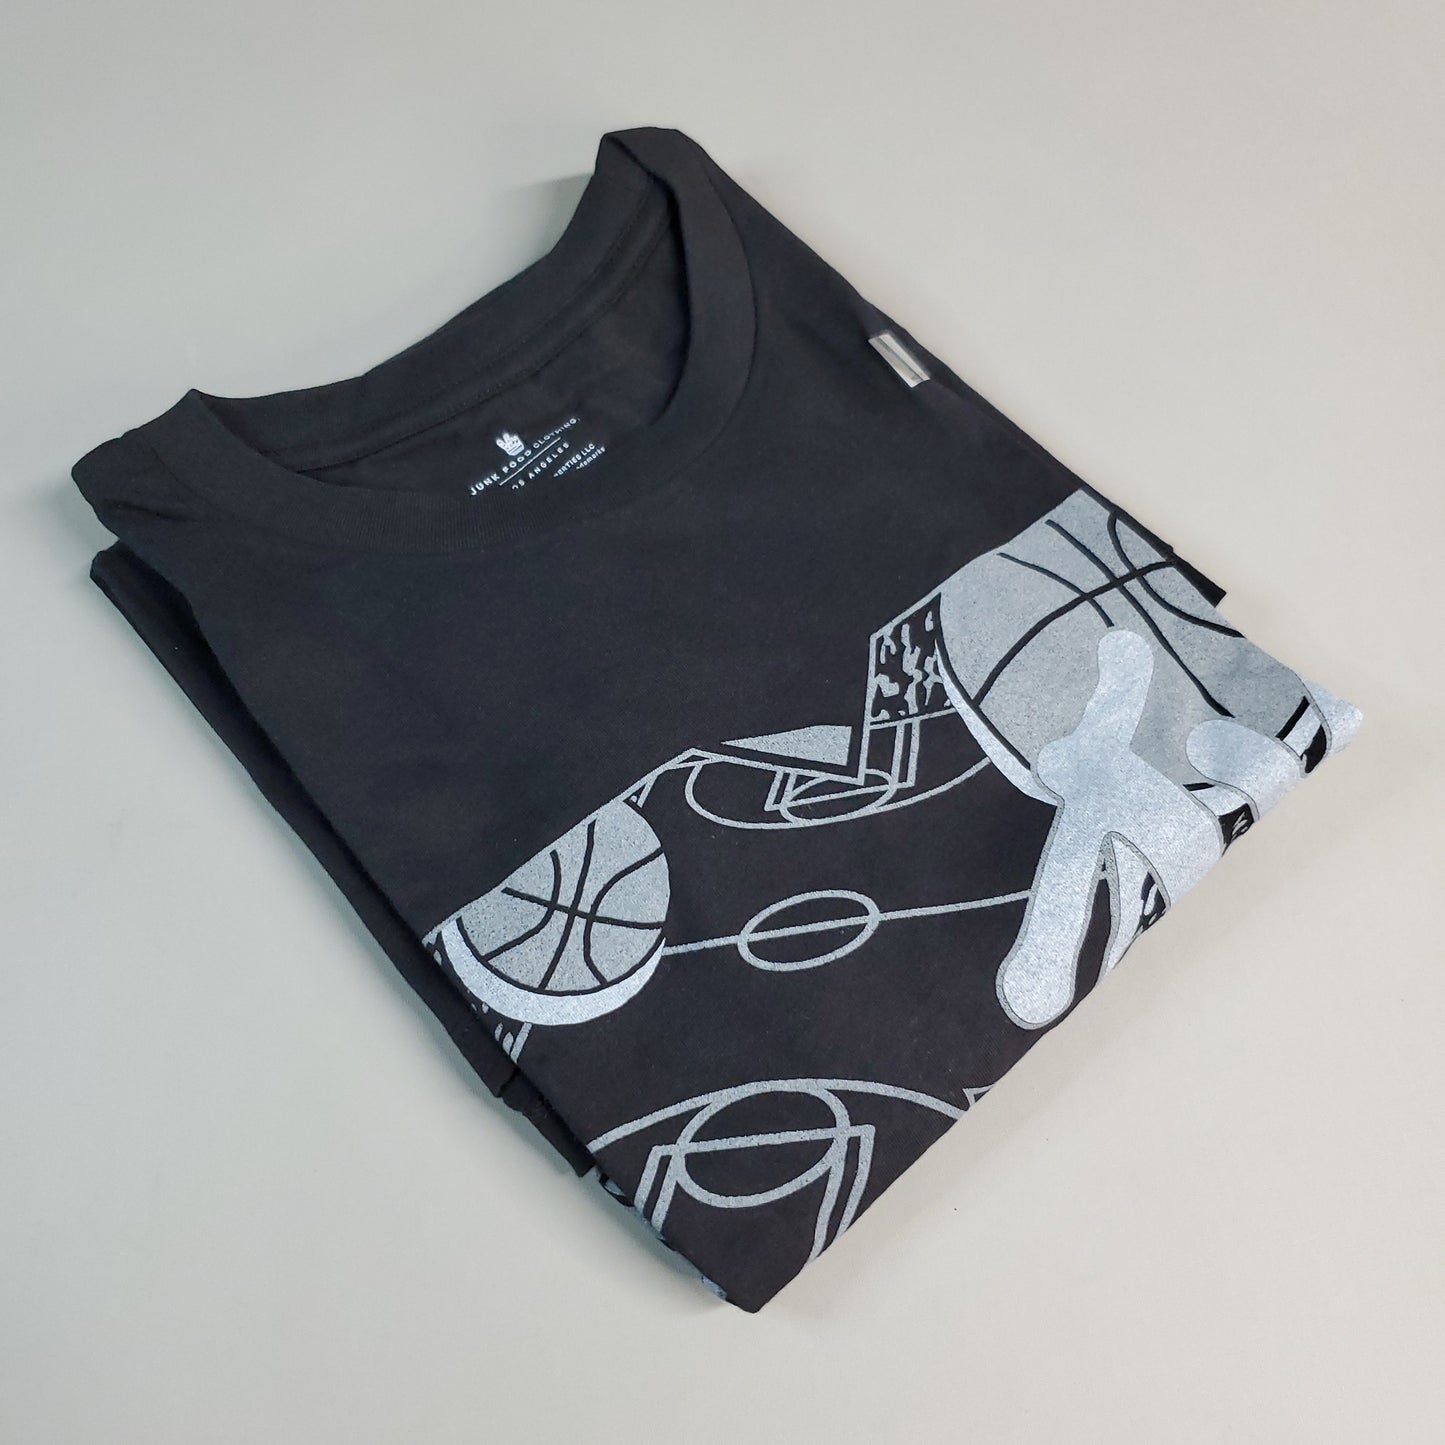 JUNK FOOD NBA MTV Short Sleeve T-Shirt I Want My Spurs Top Men's Sz XL Black (New)